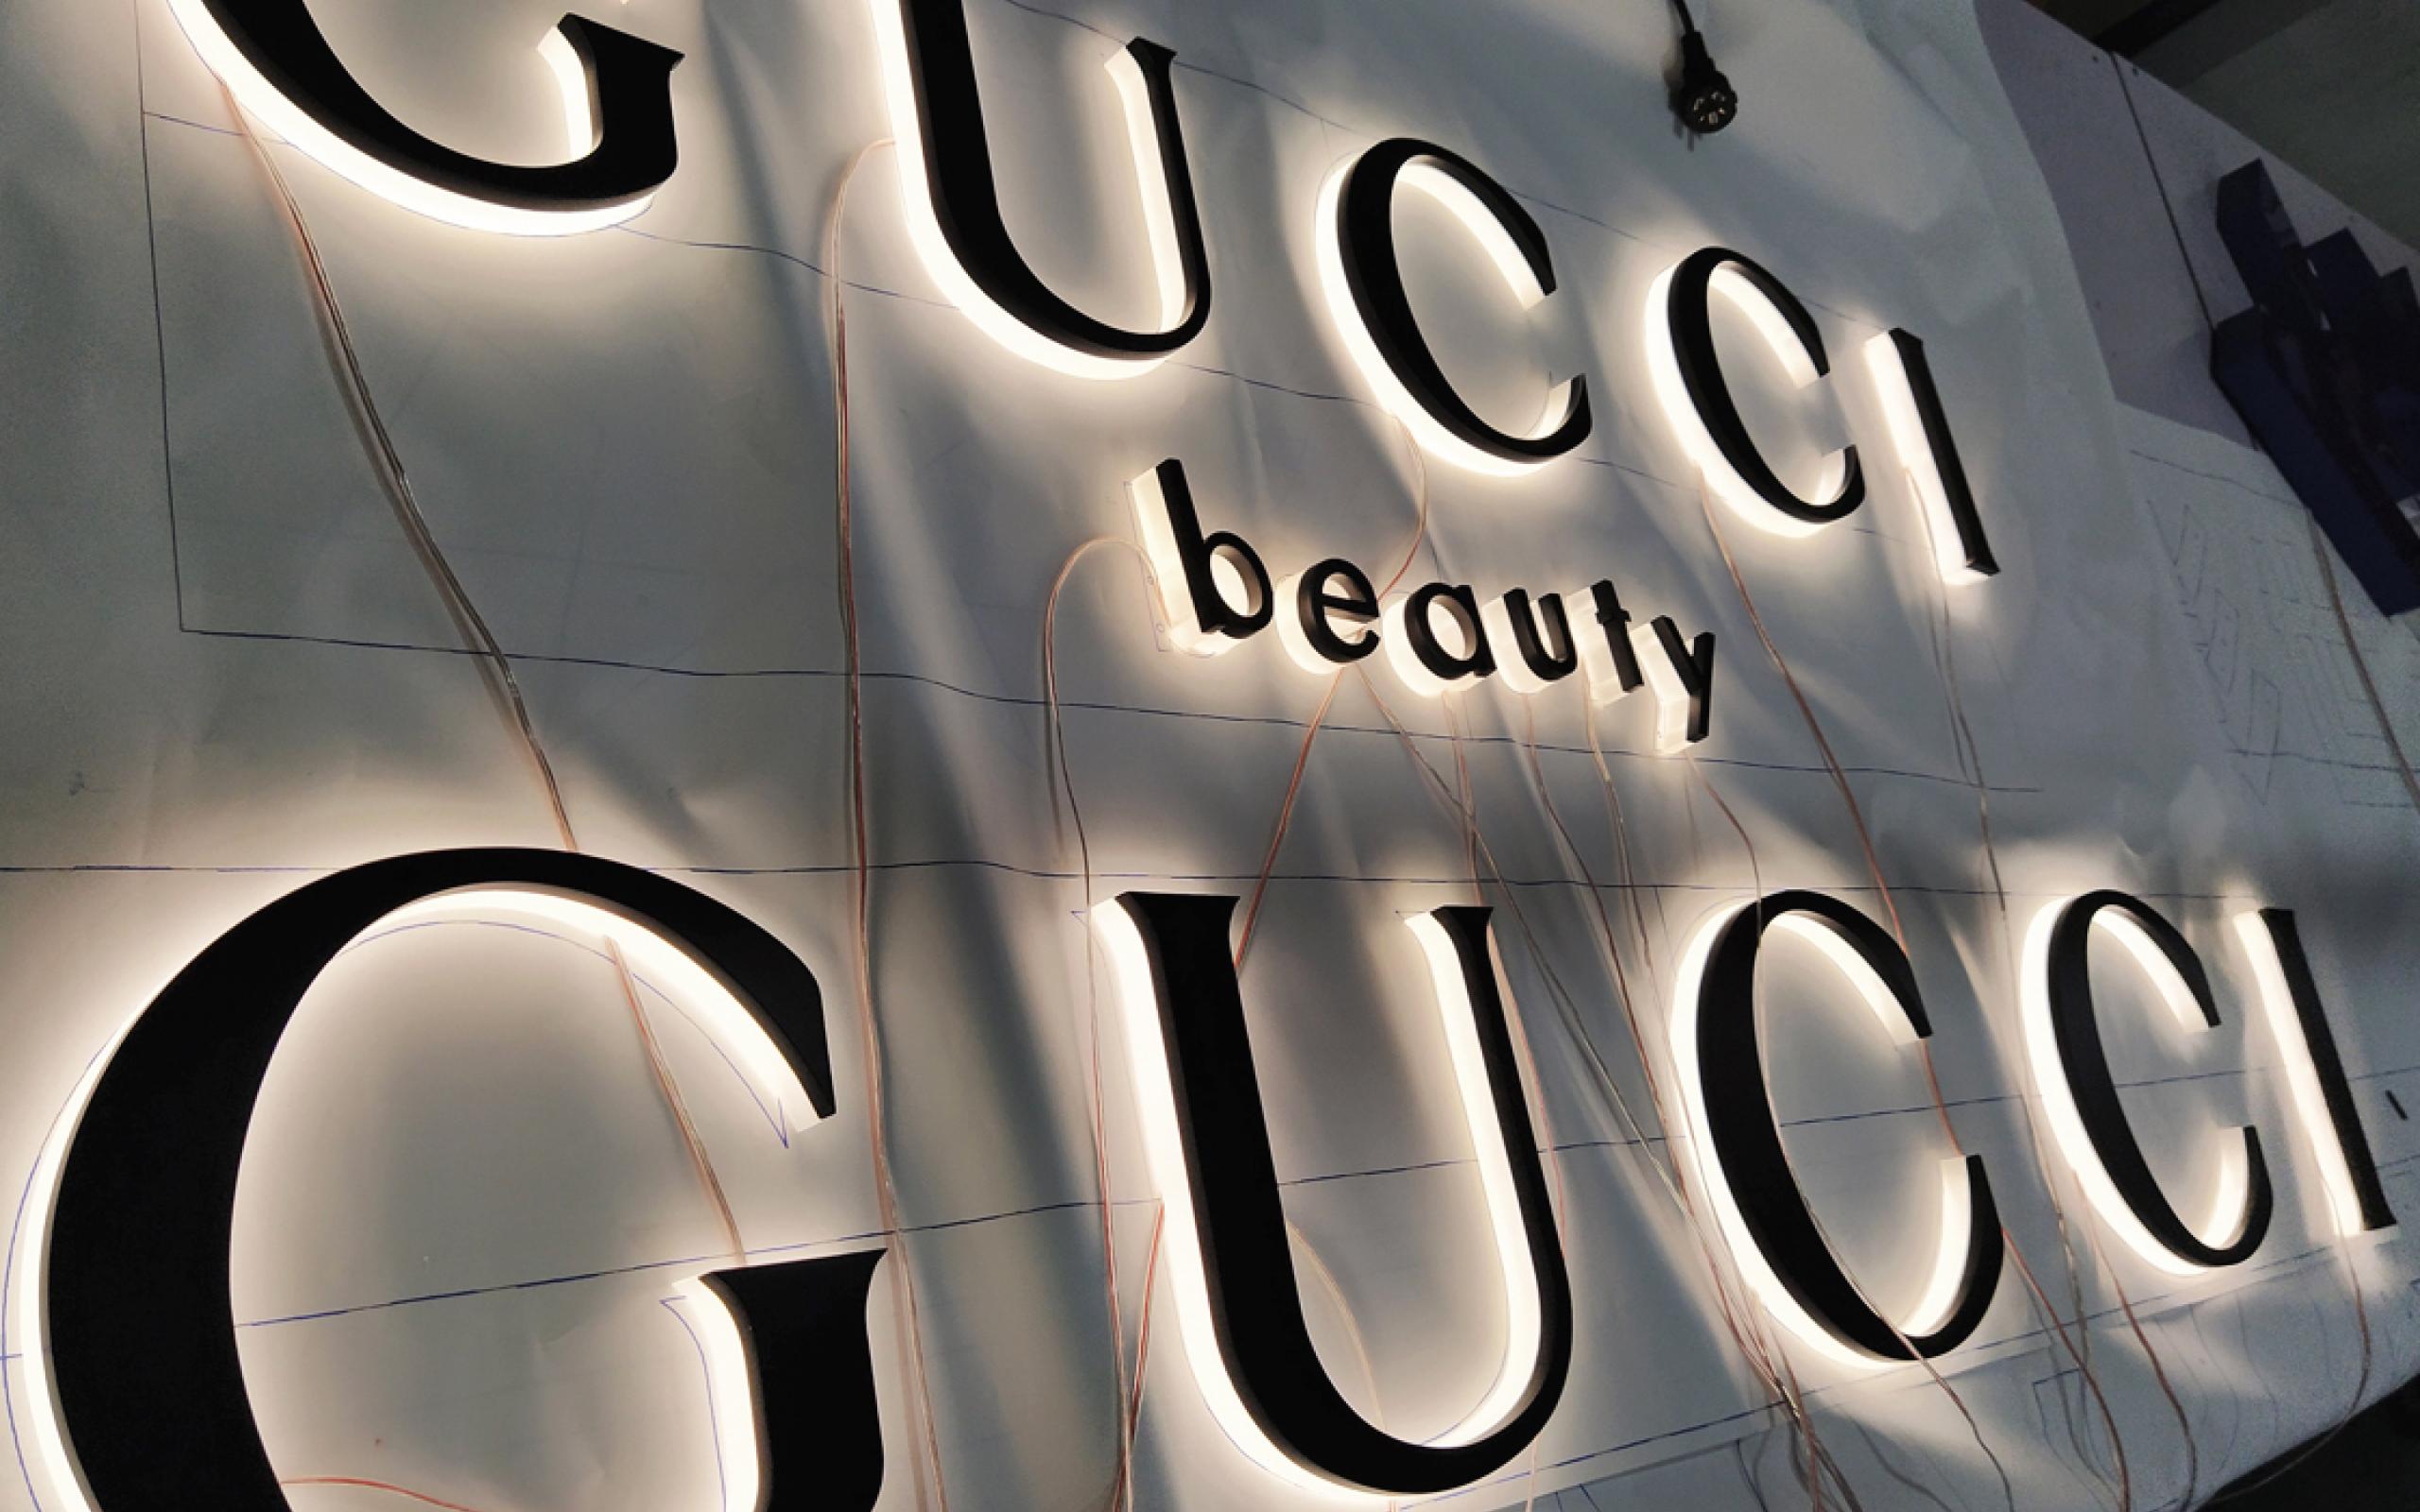 gucci-backlit-lettering-illuminated